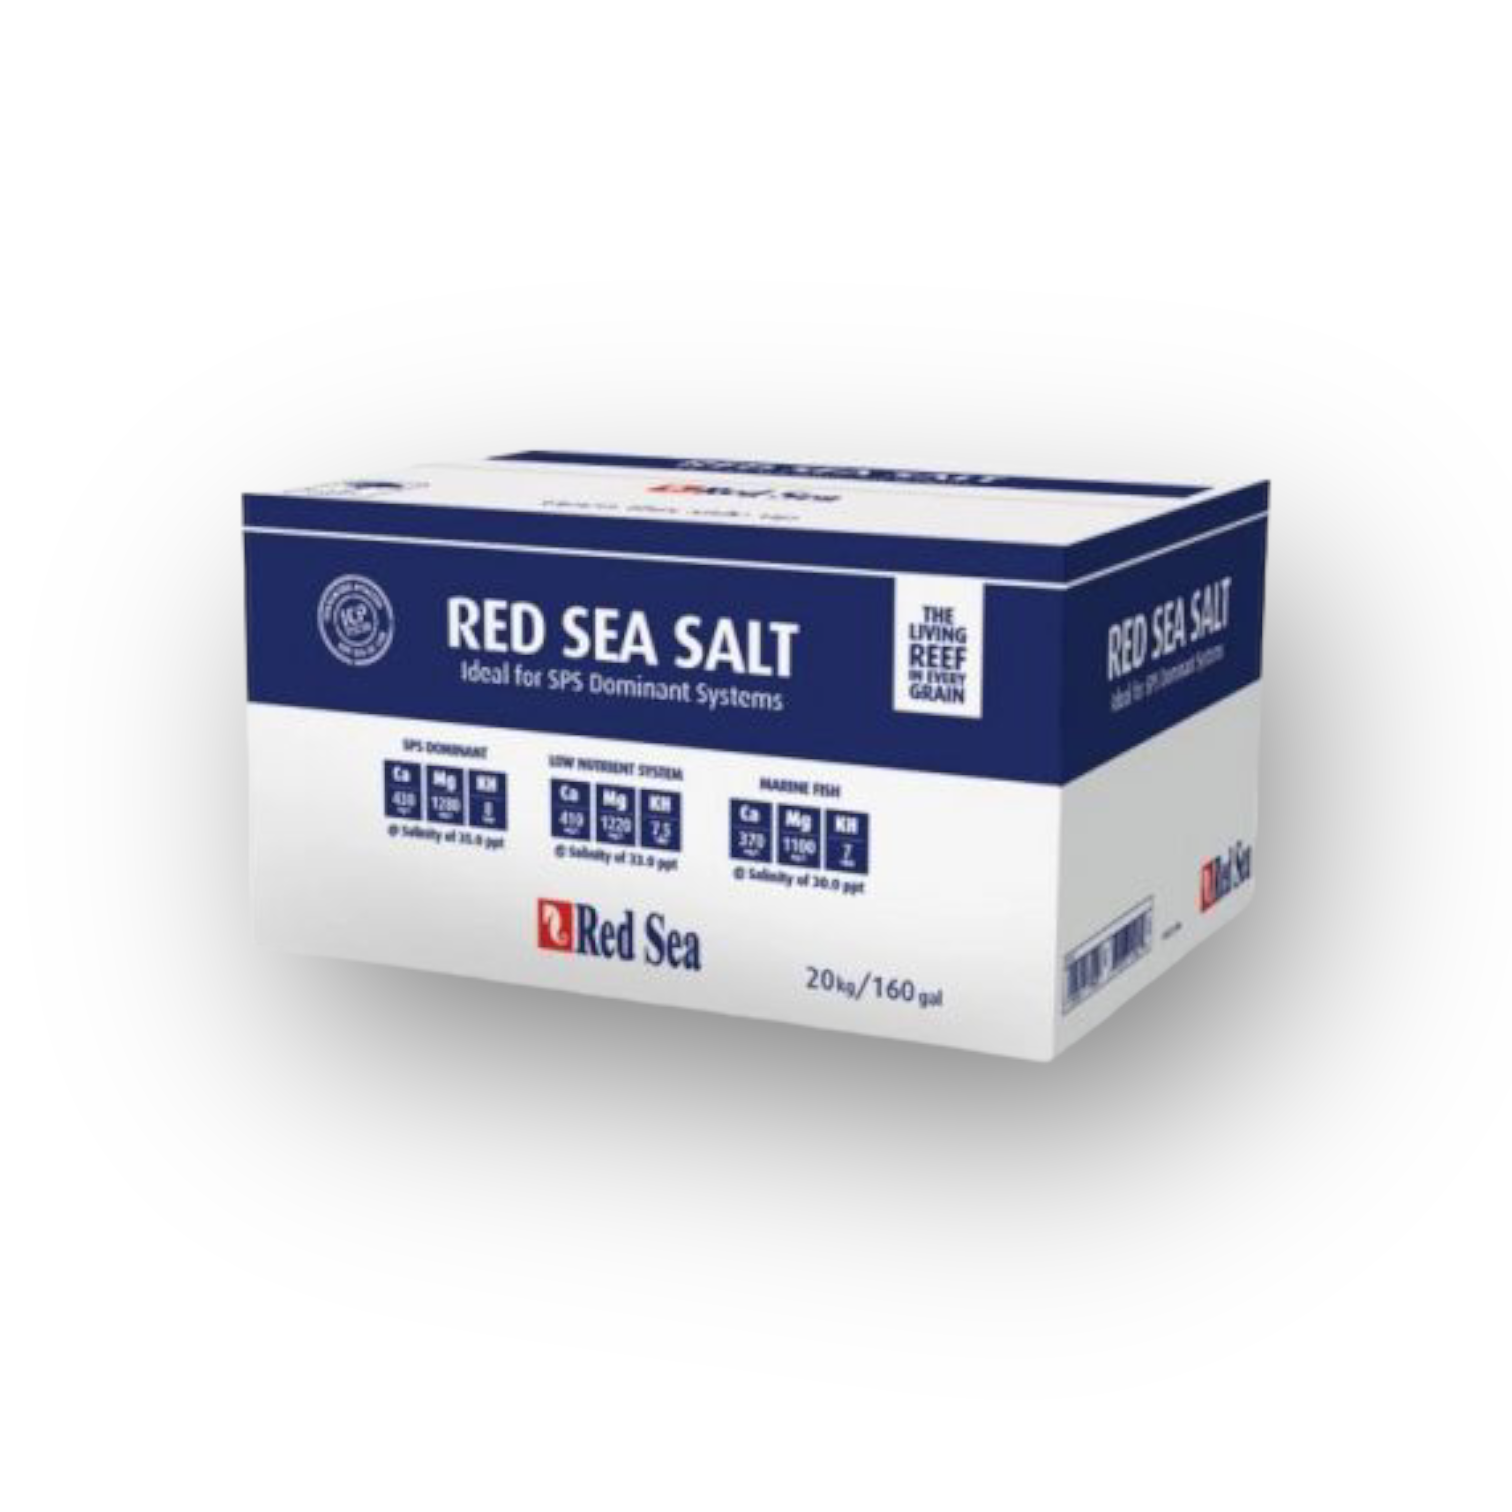 Red Sea Salt 20Kg Box